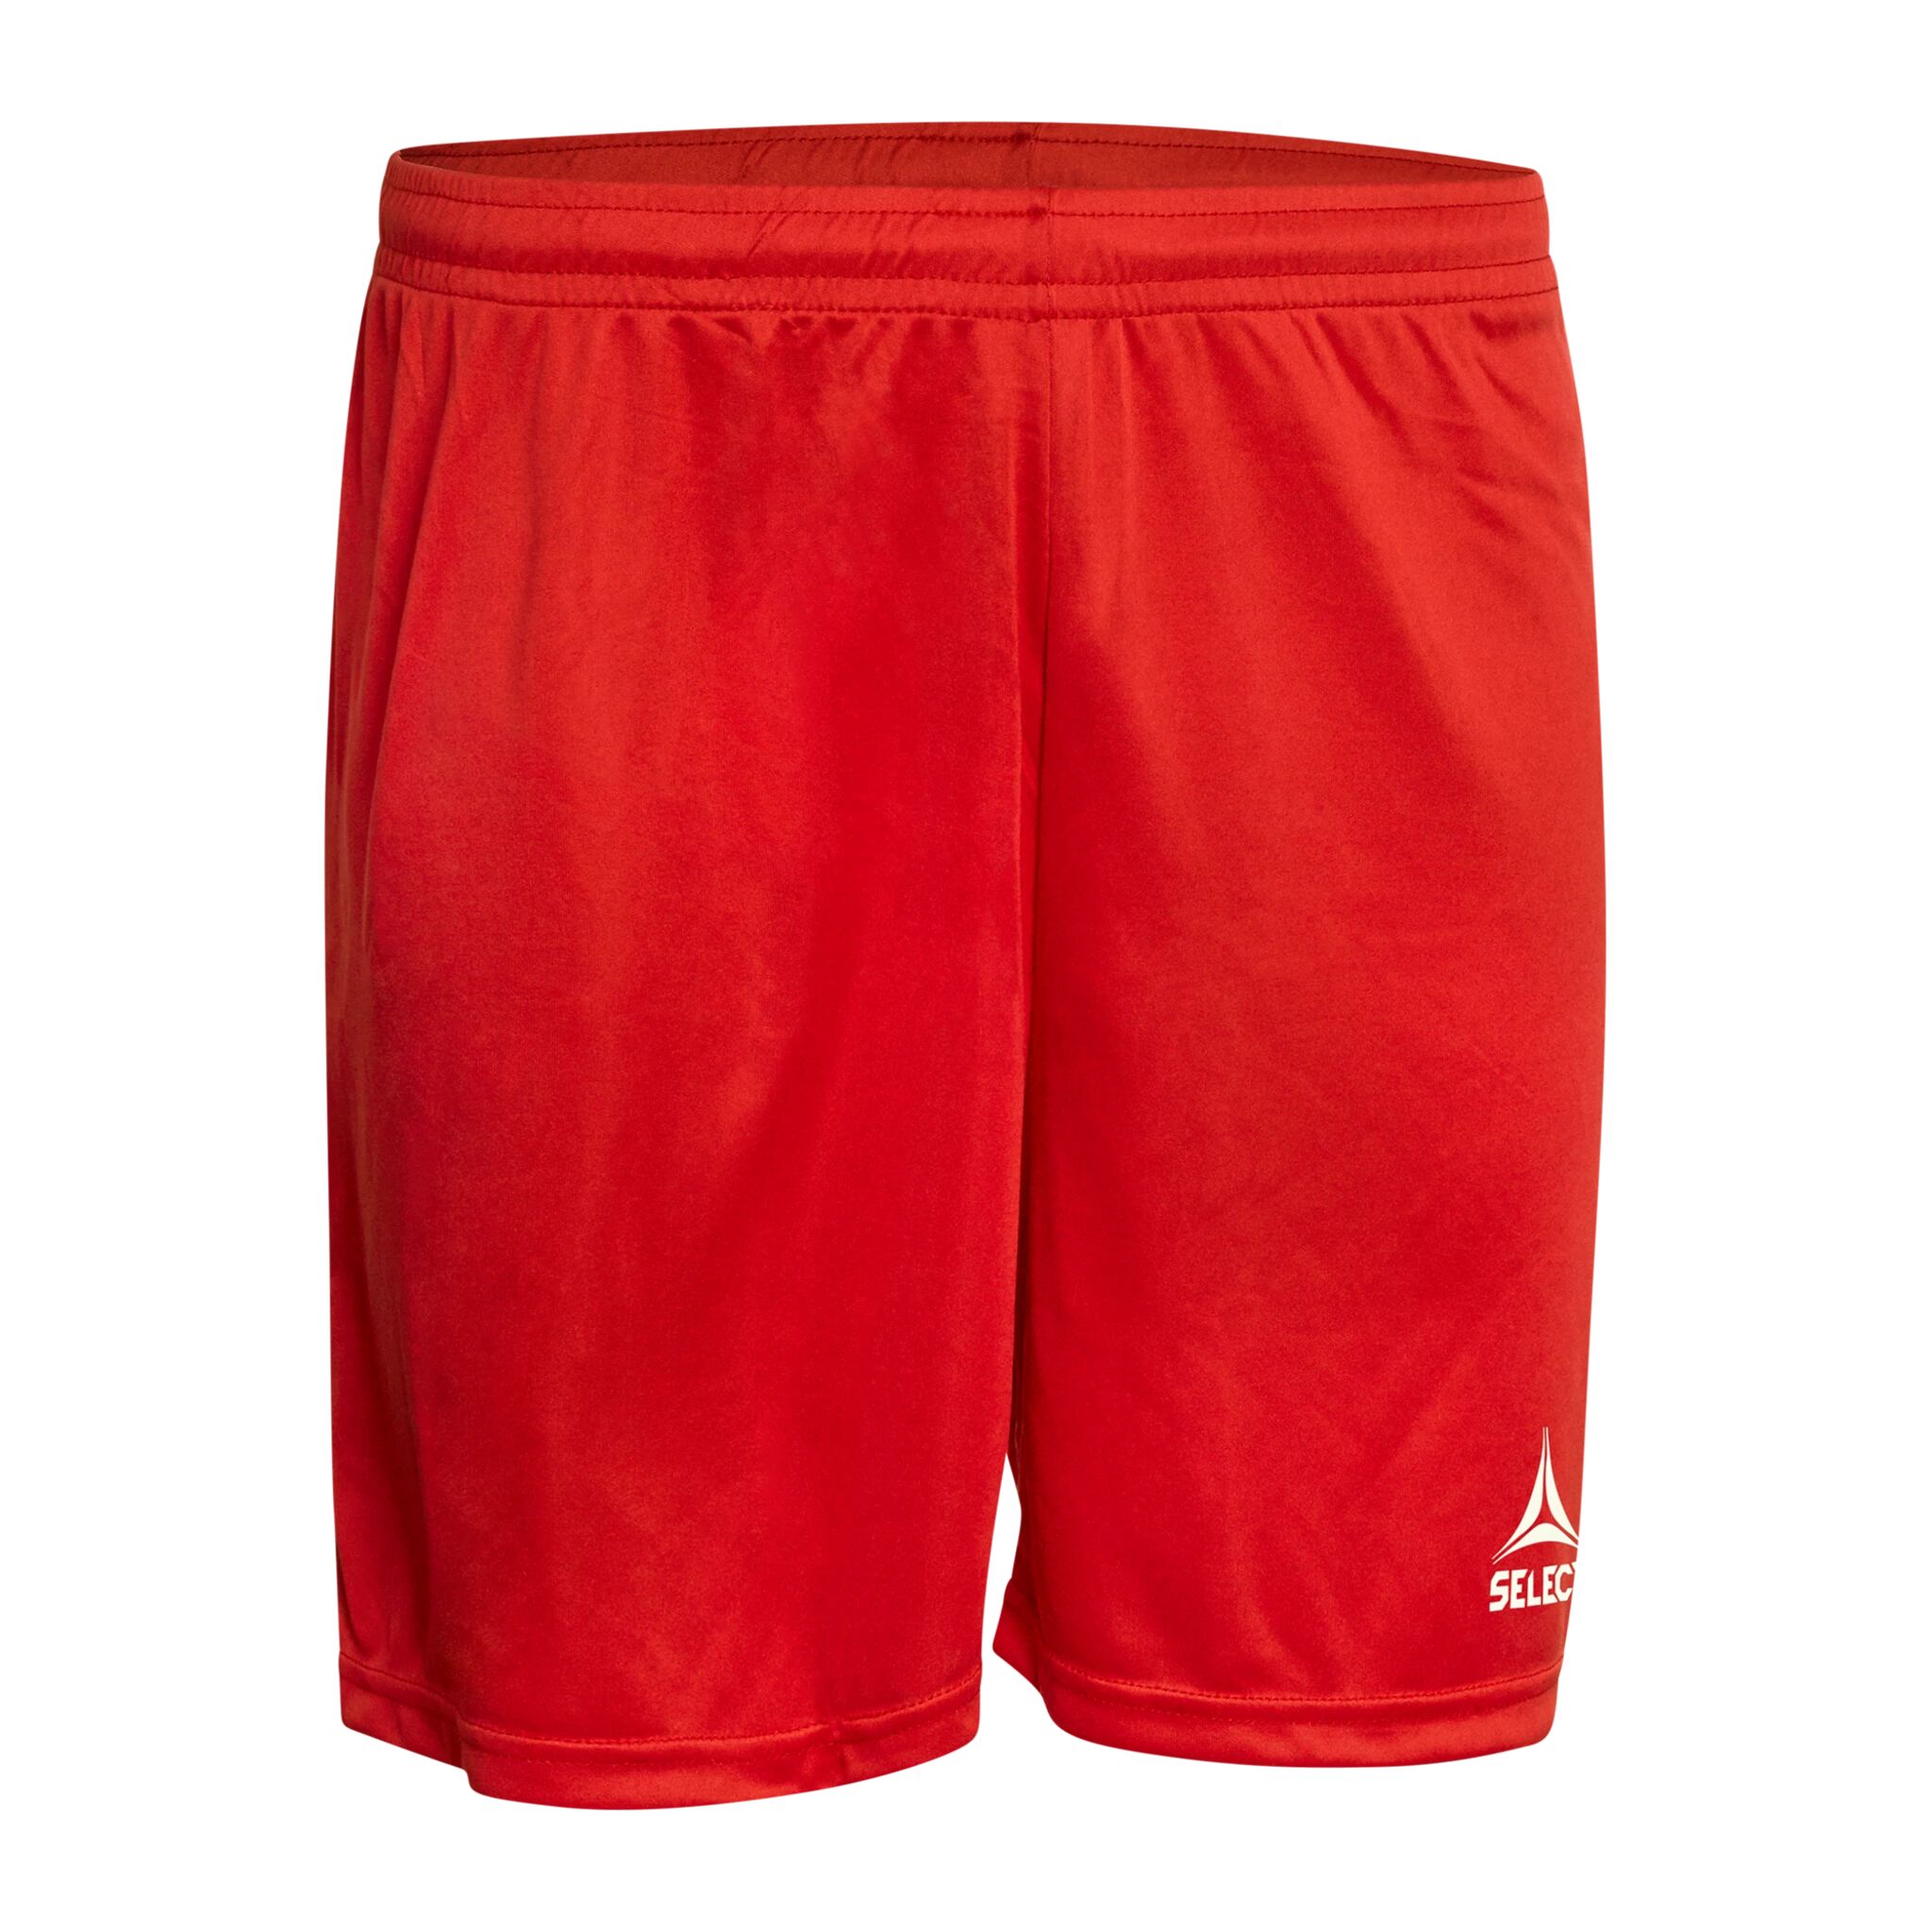 Select Player shorts Pisa, shorts senior M RED